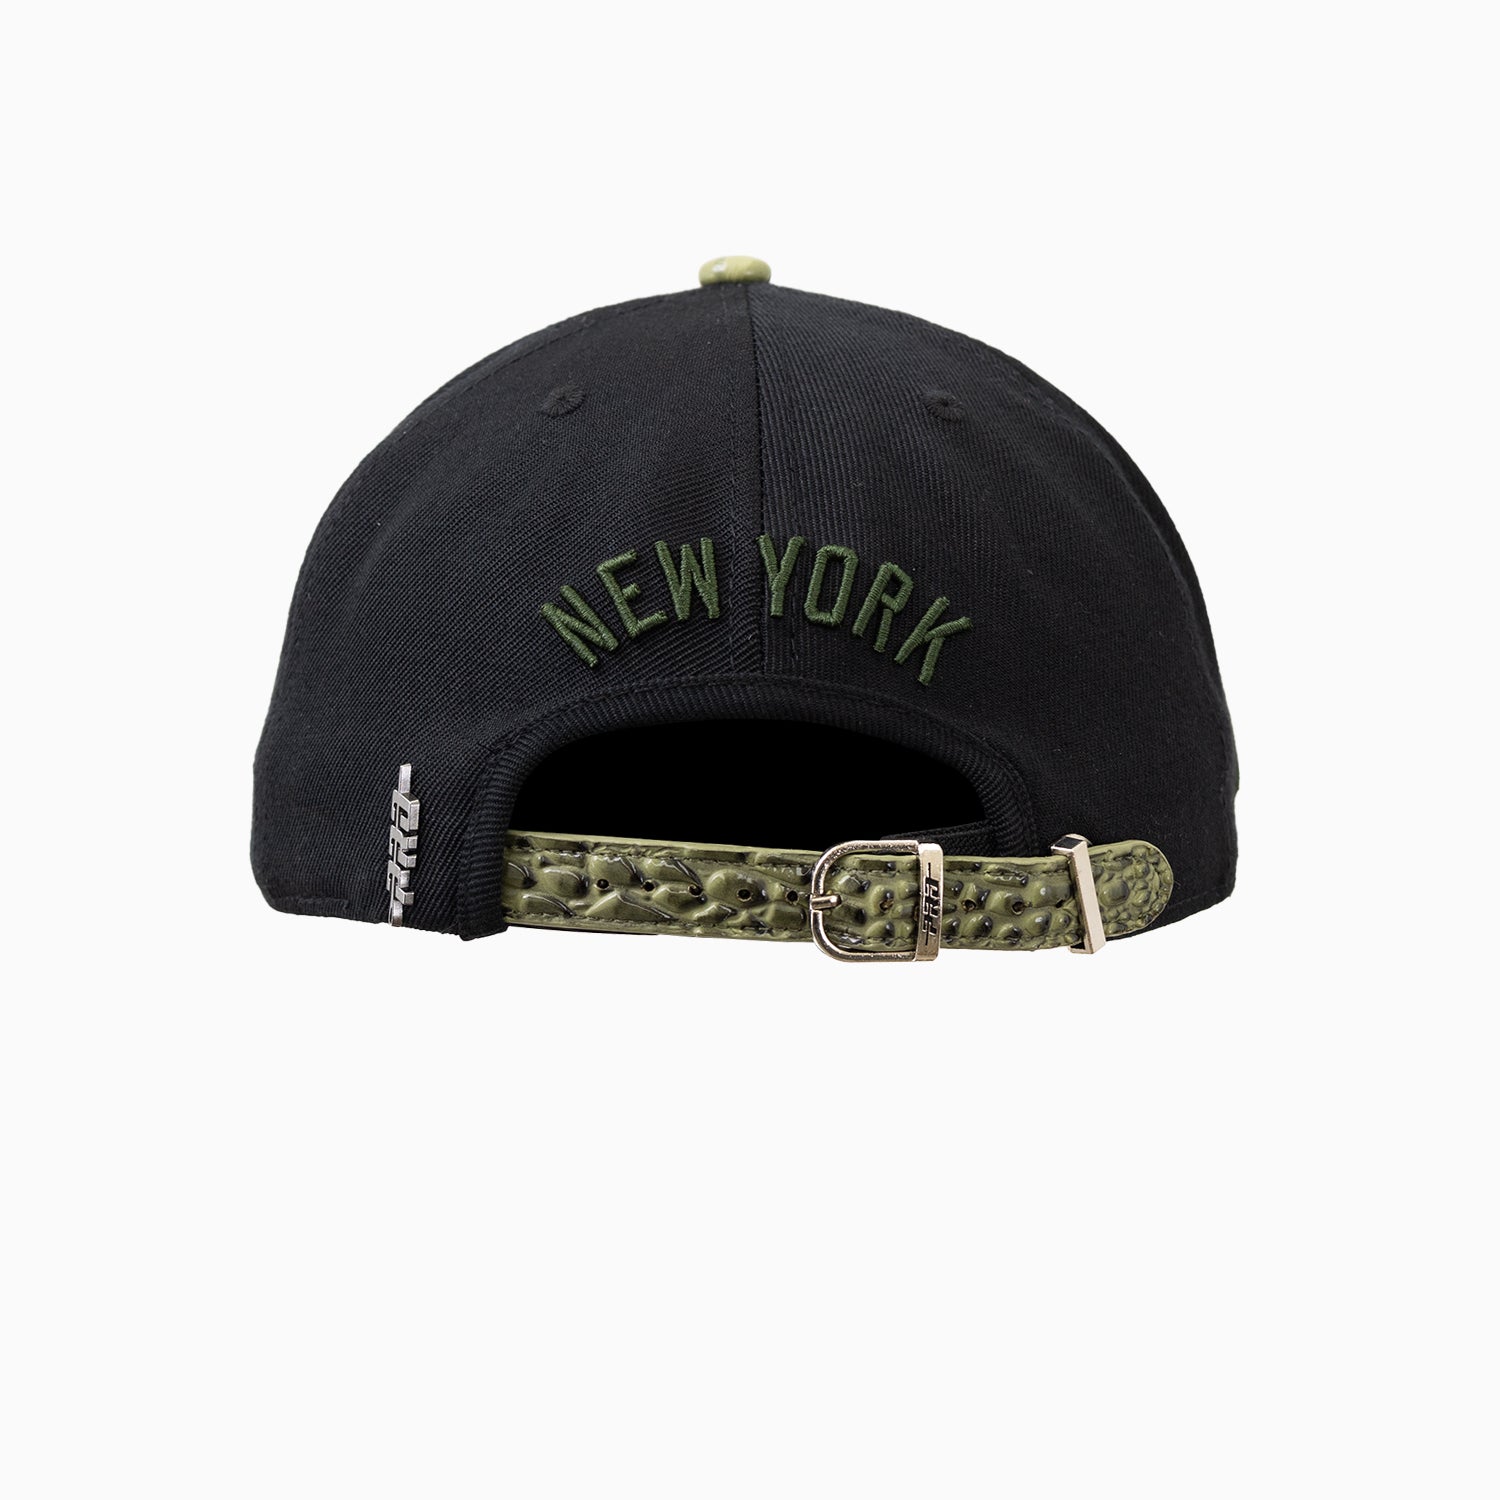 Pro Standard New York Yankees MLB Leather Visor Strapback Hat